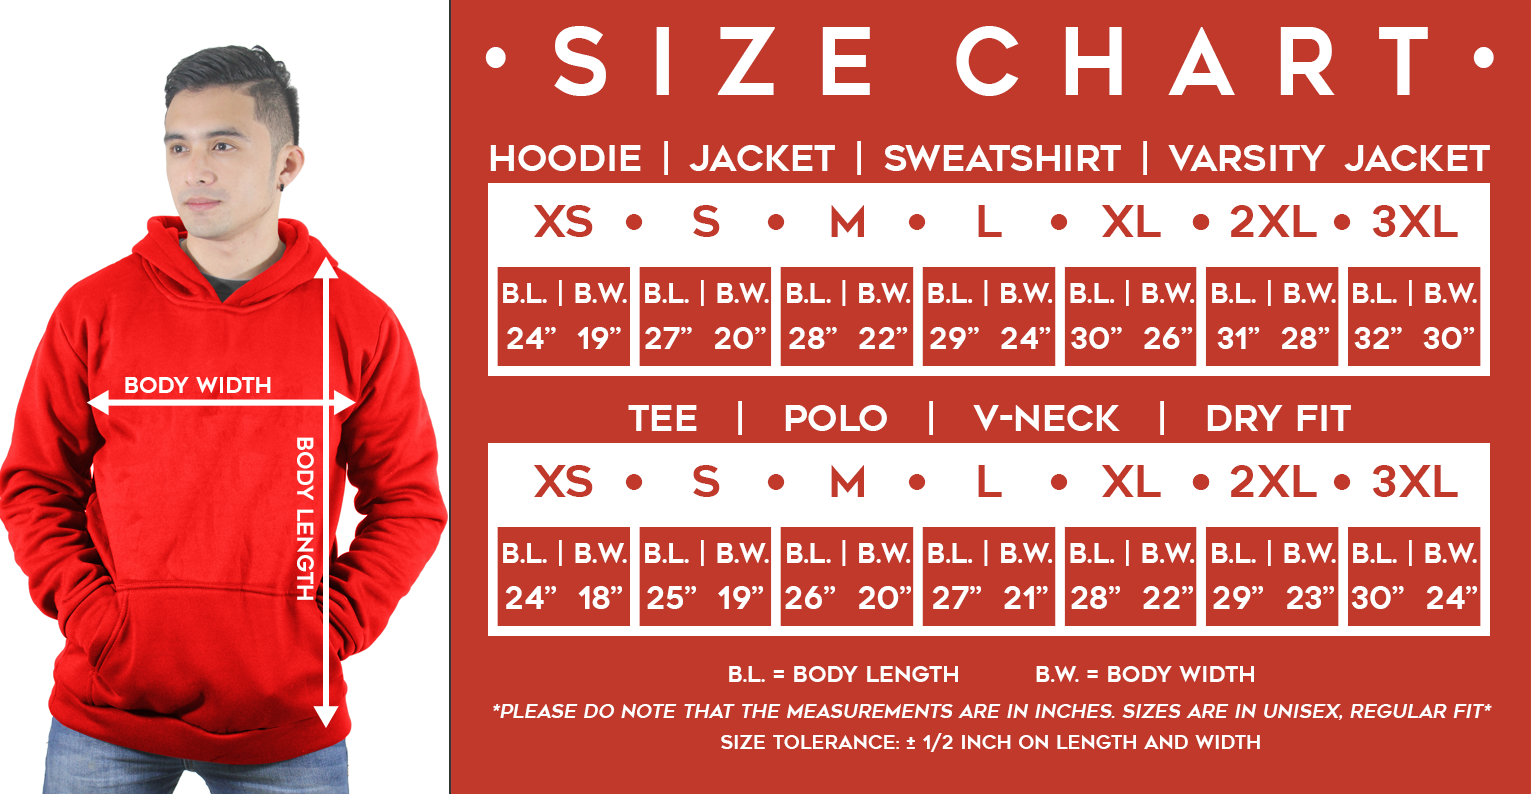 jacket size vs shirt size 